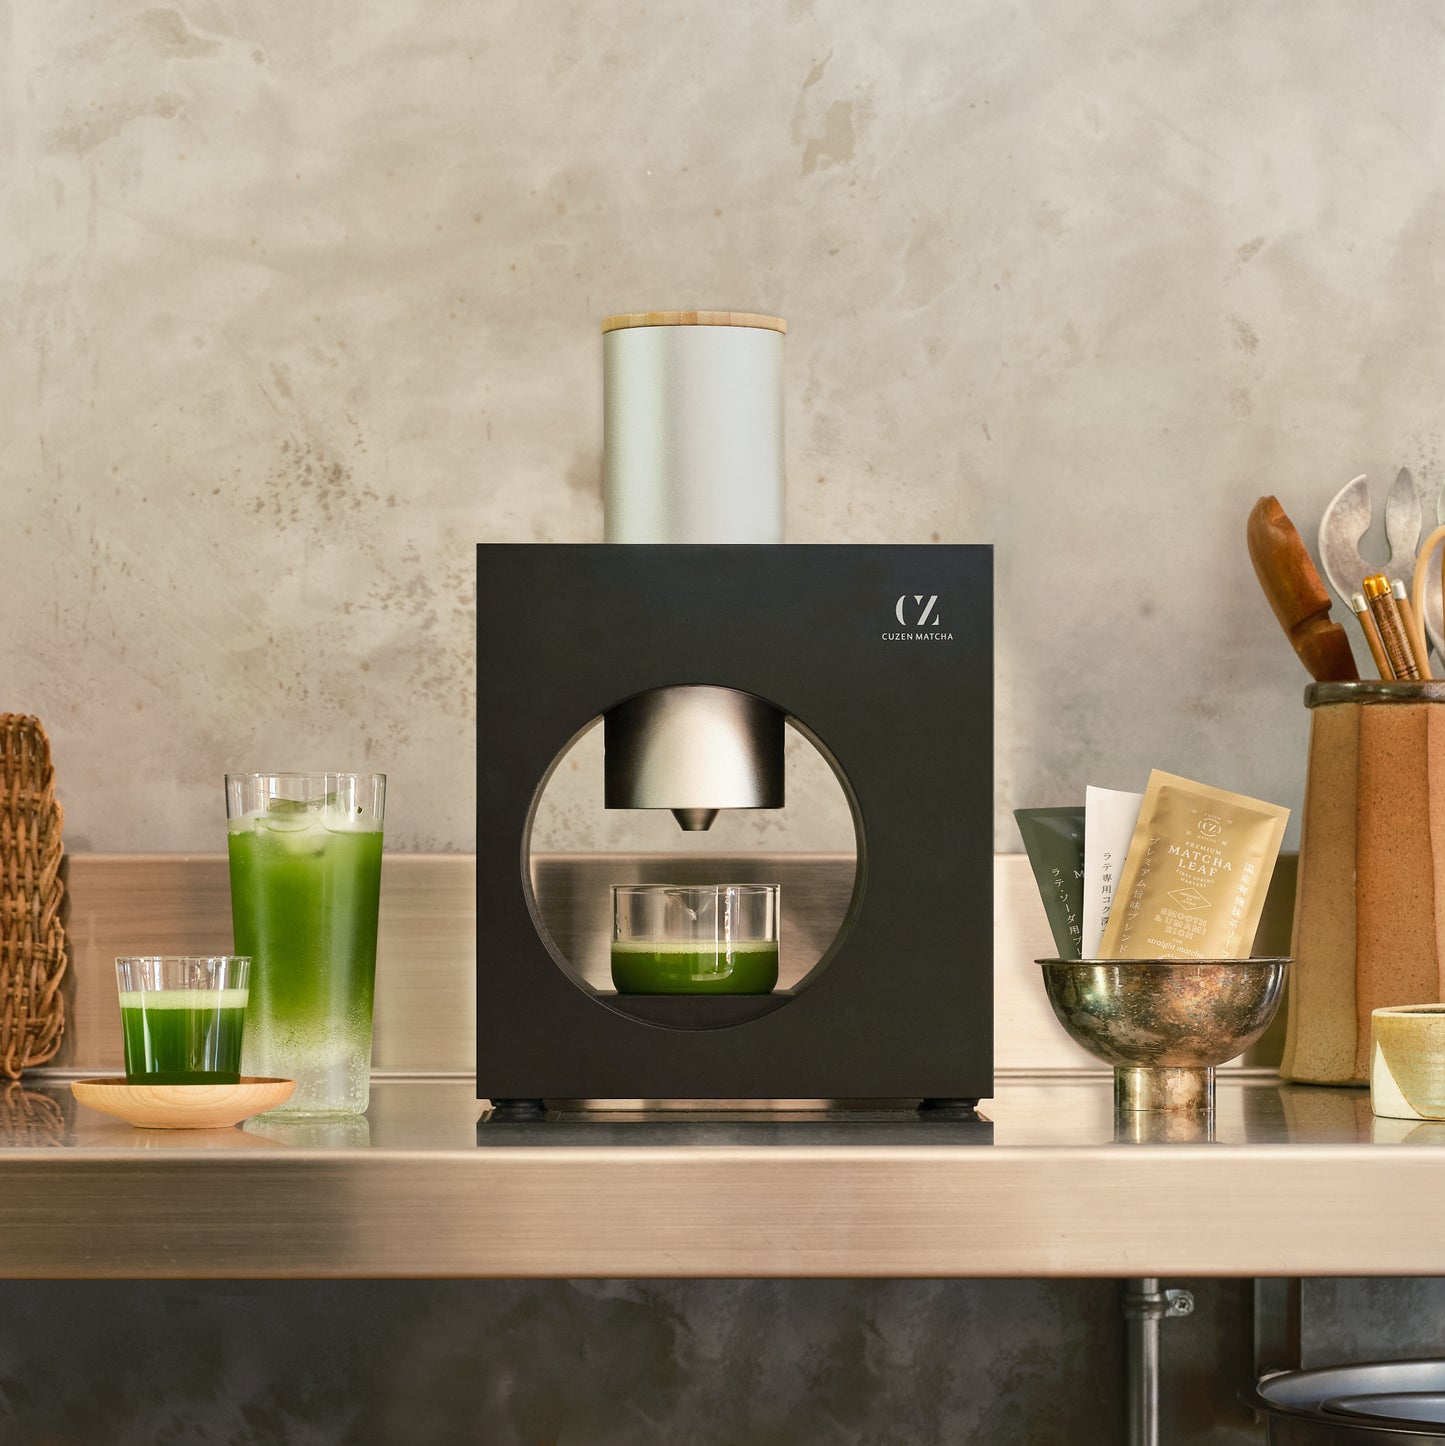 Cuzen matcha maker review: Is the green tea machine worth it?